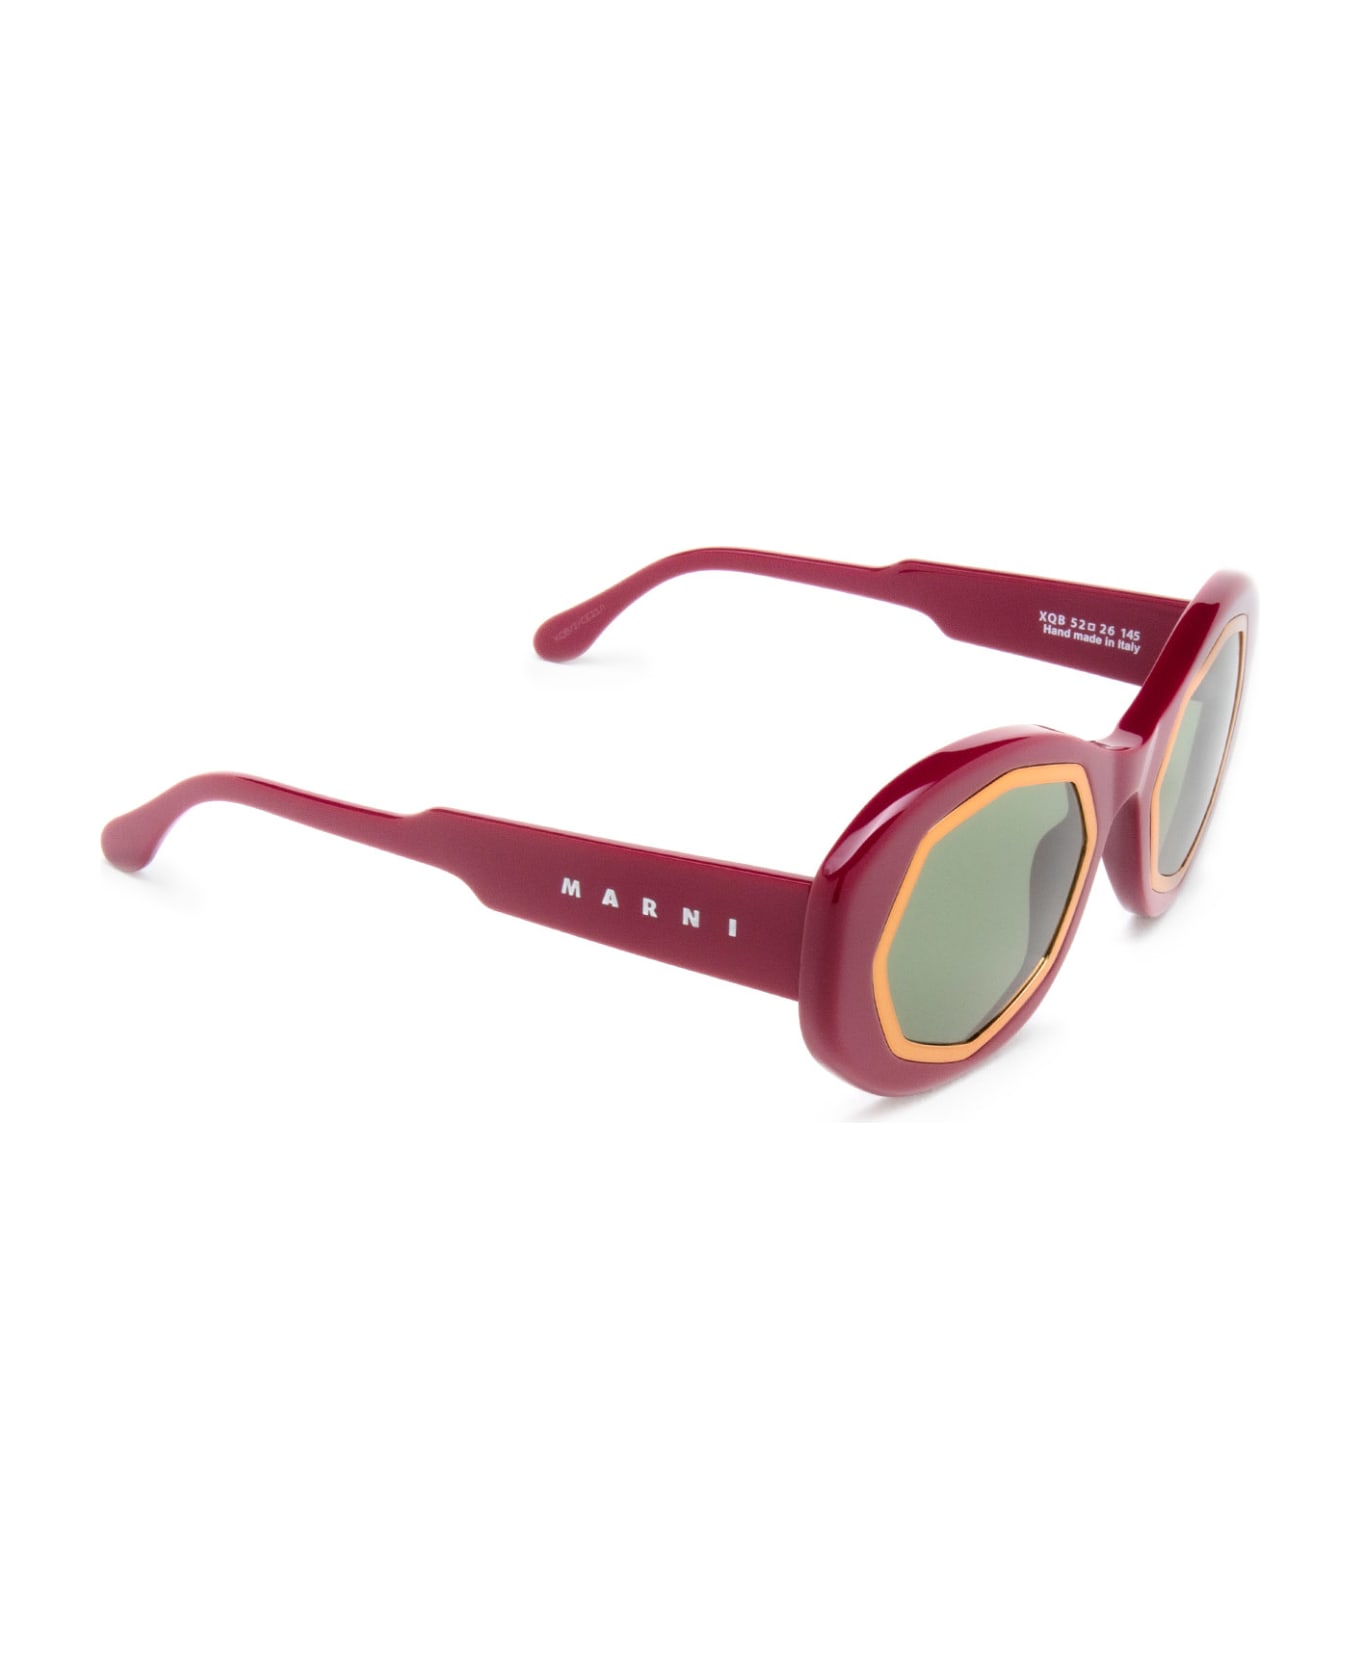 Marni Eyewear Mount Bromo Bordeaux Sunglasses - Bordeaux